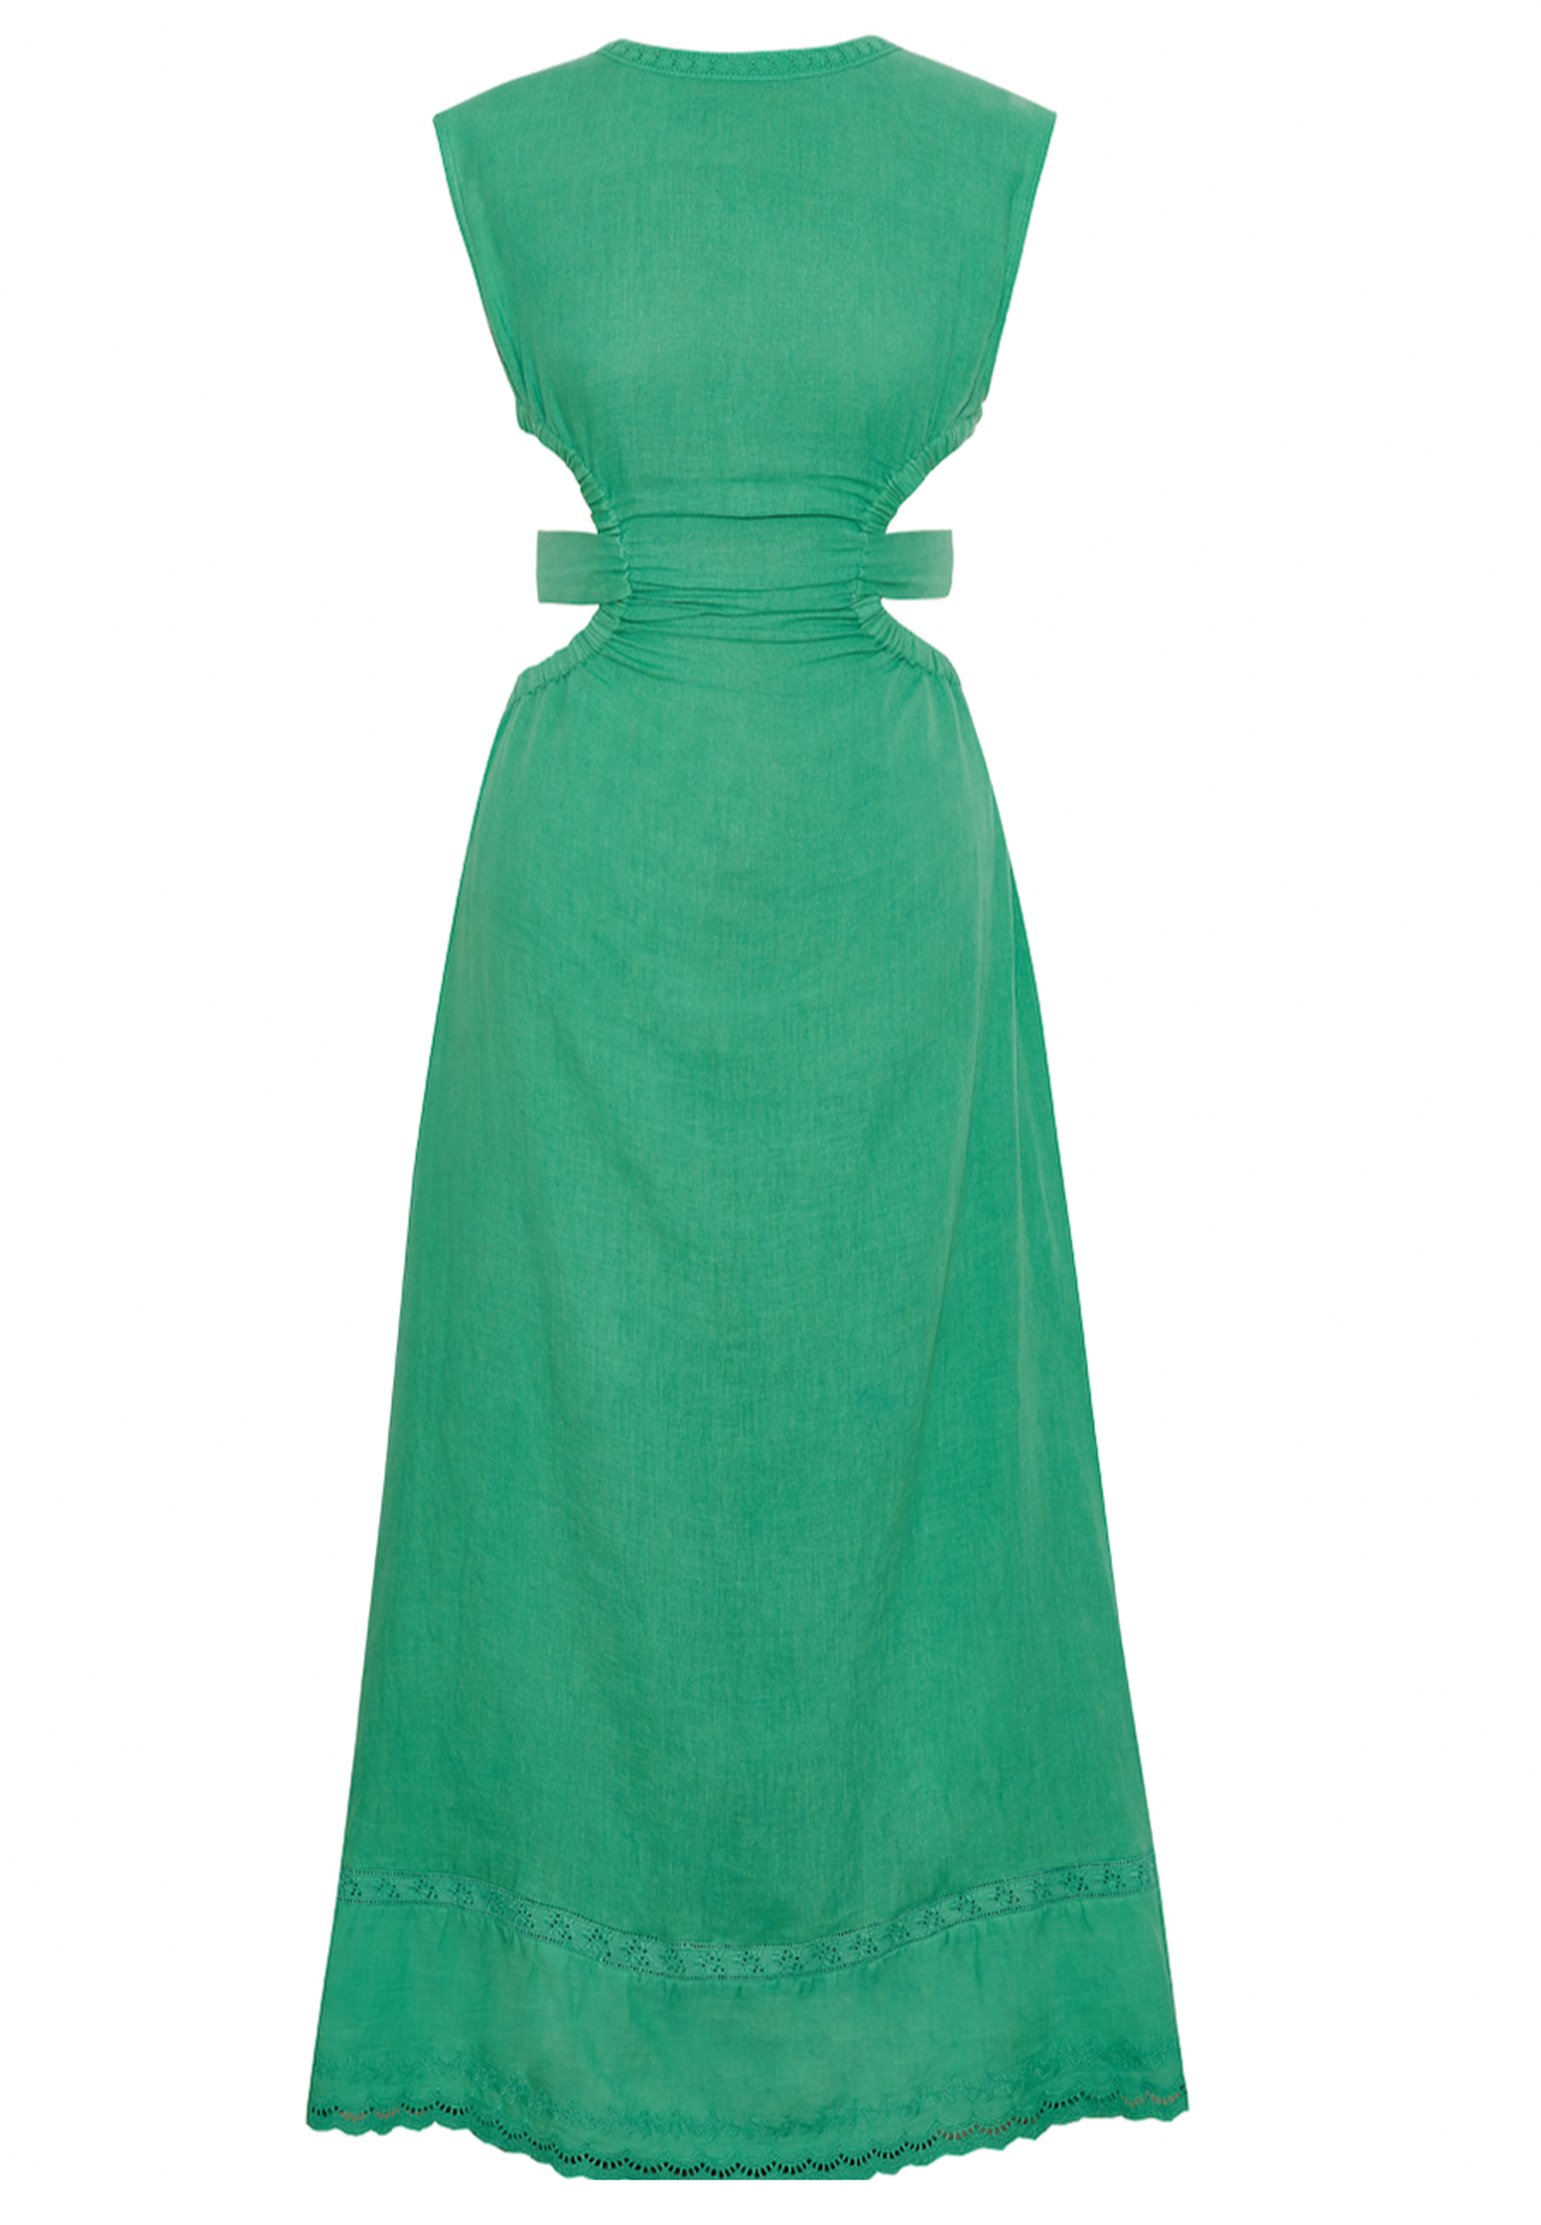 Dress MAIA BERGMAN Color: mint (Code: 2250) in online store Allure